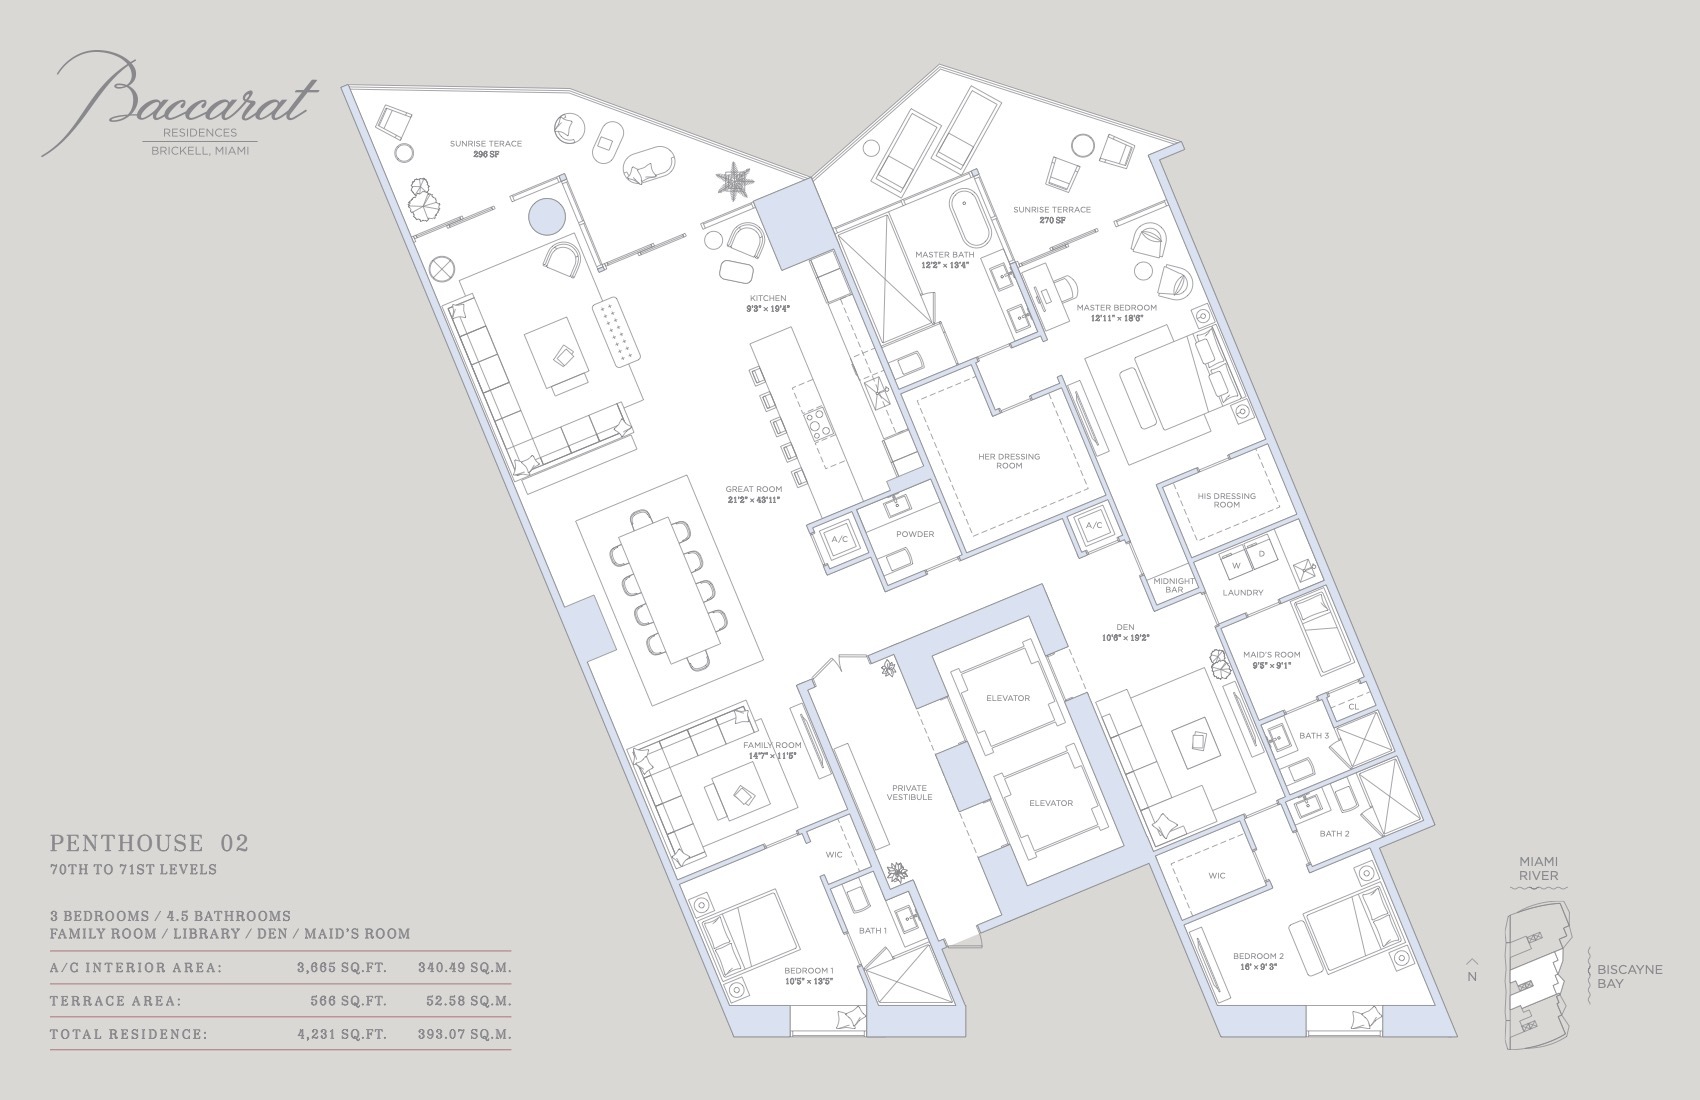 Floor Plan for Baccarat Brickell Floorplans, Penthouse 02